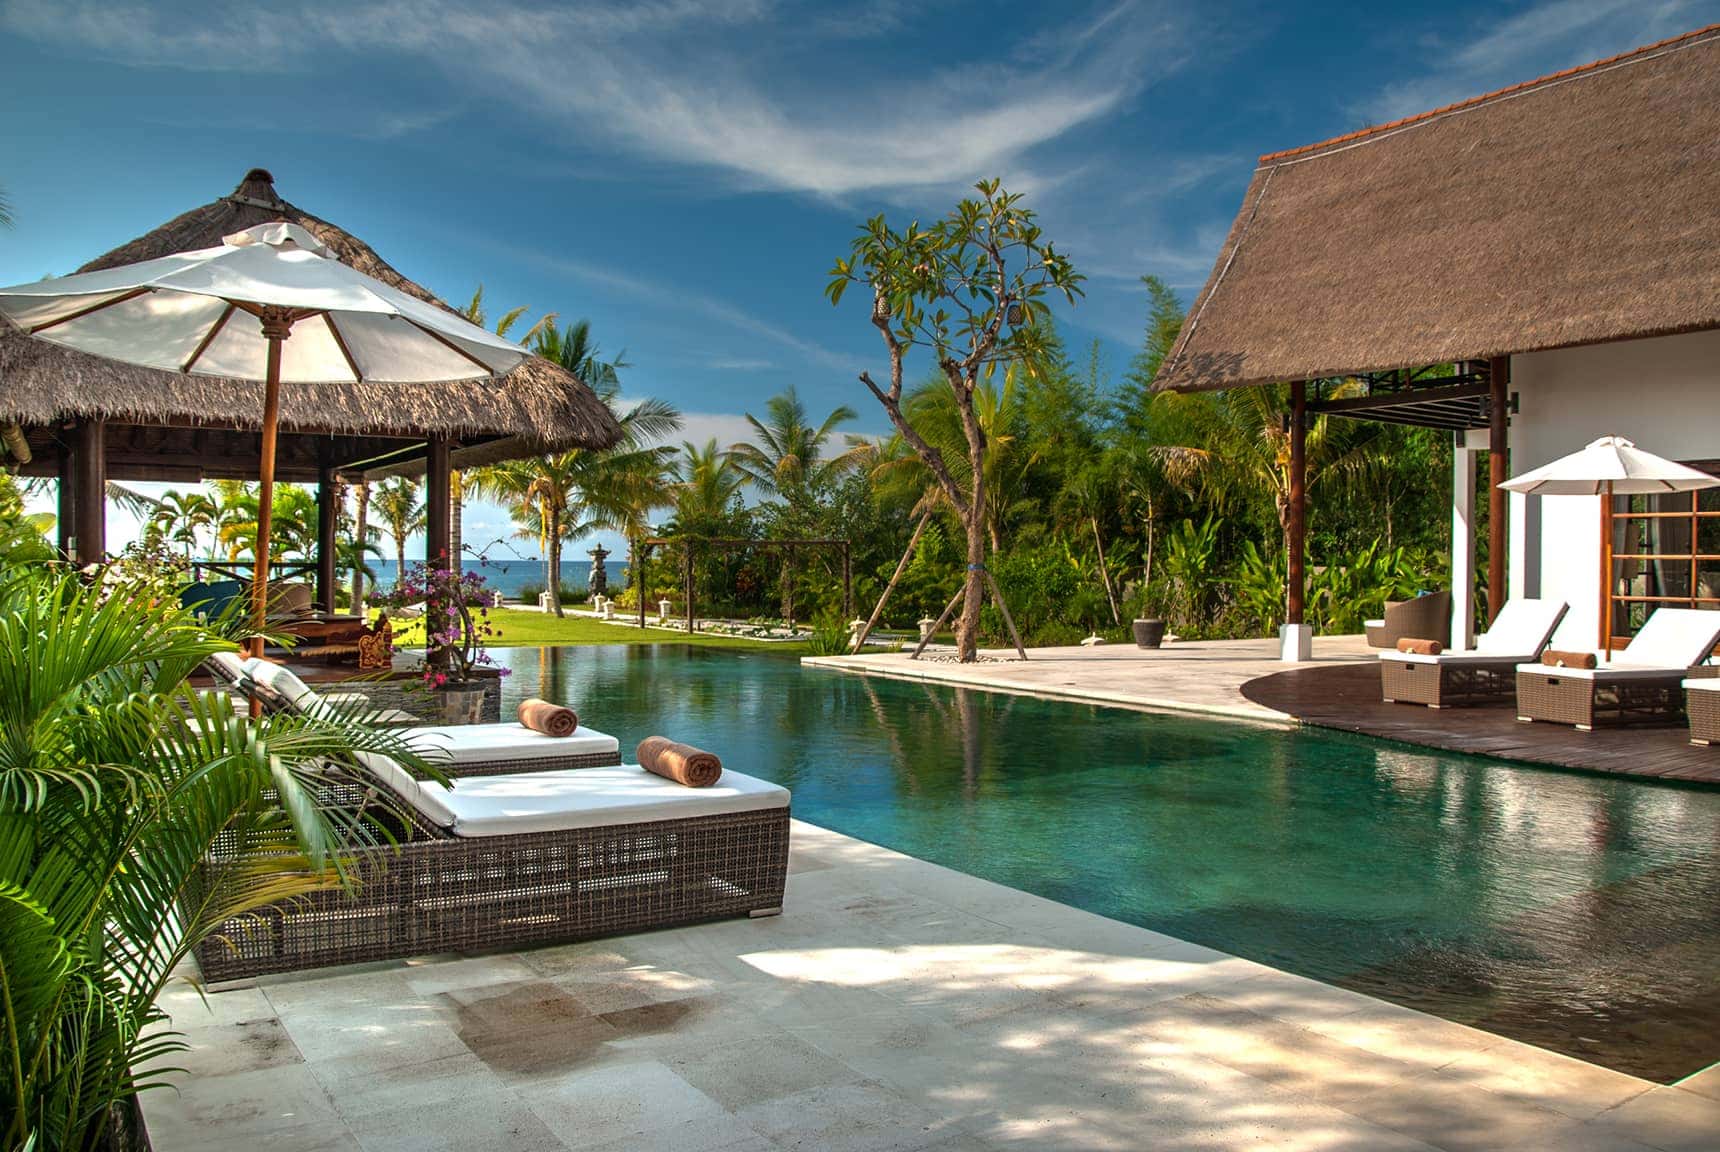 Villa Aparna - Seririt, Bali Indonesia (Bali villa photography by master photographer Rick Carmichael of LuxViz)